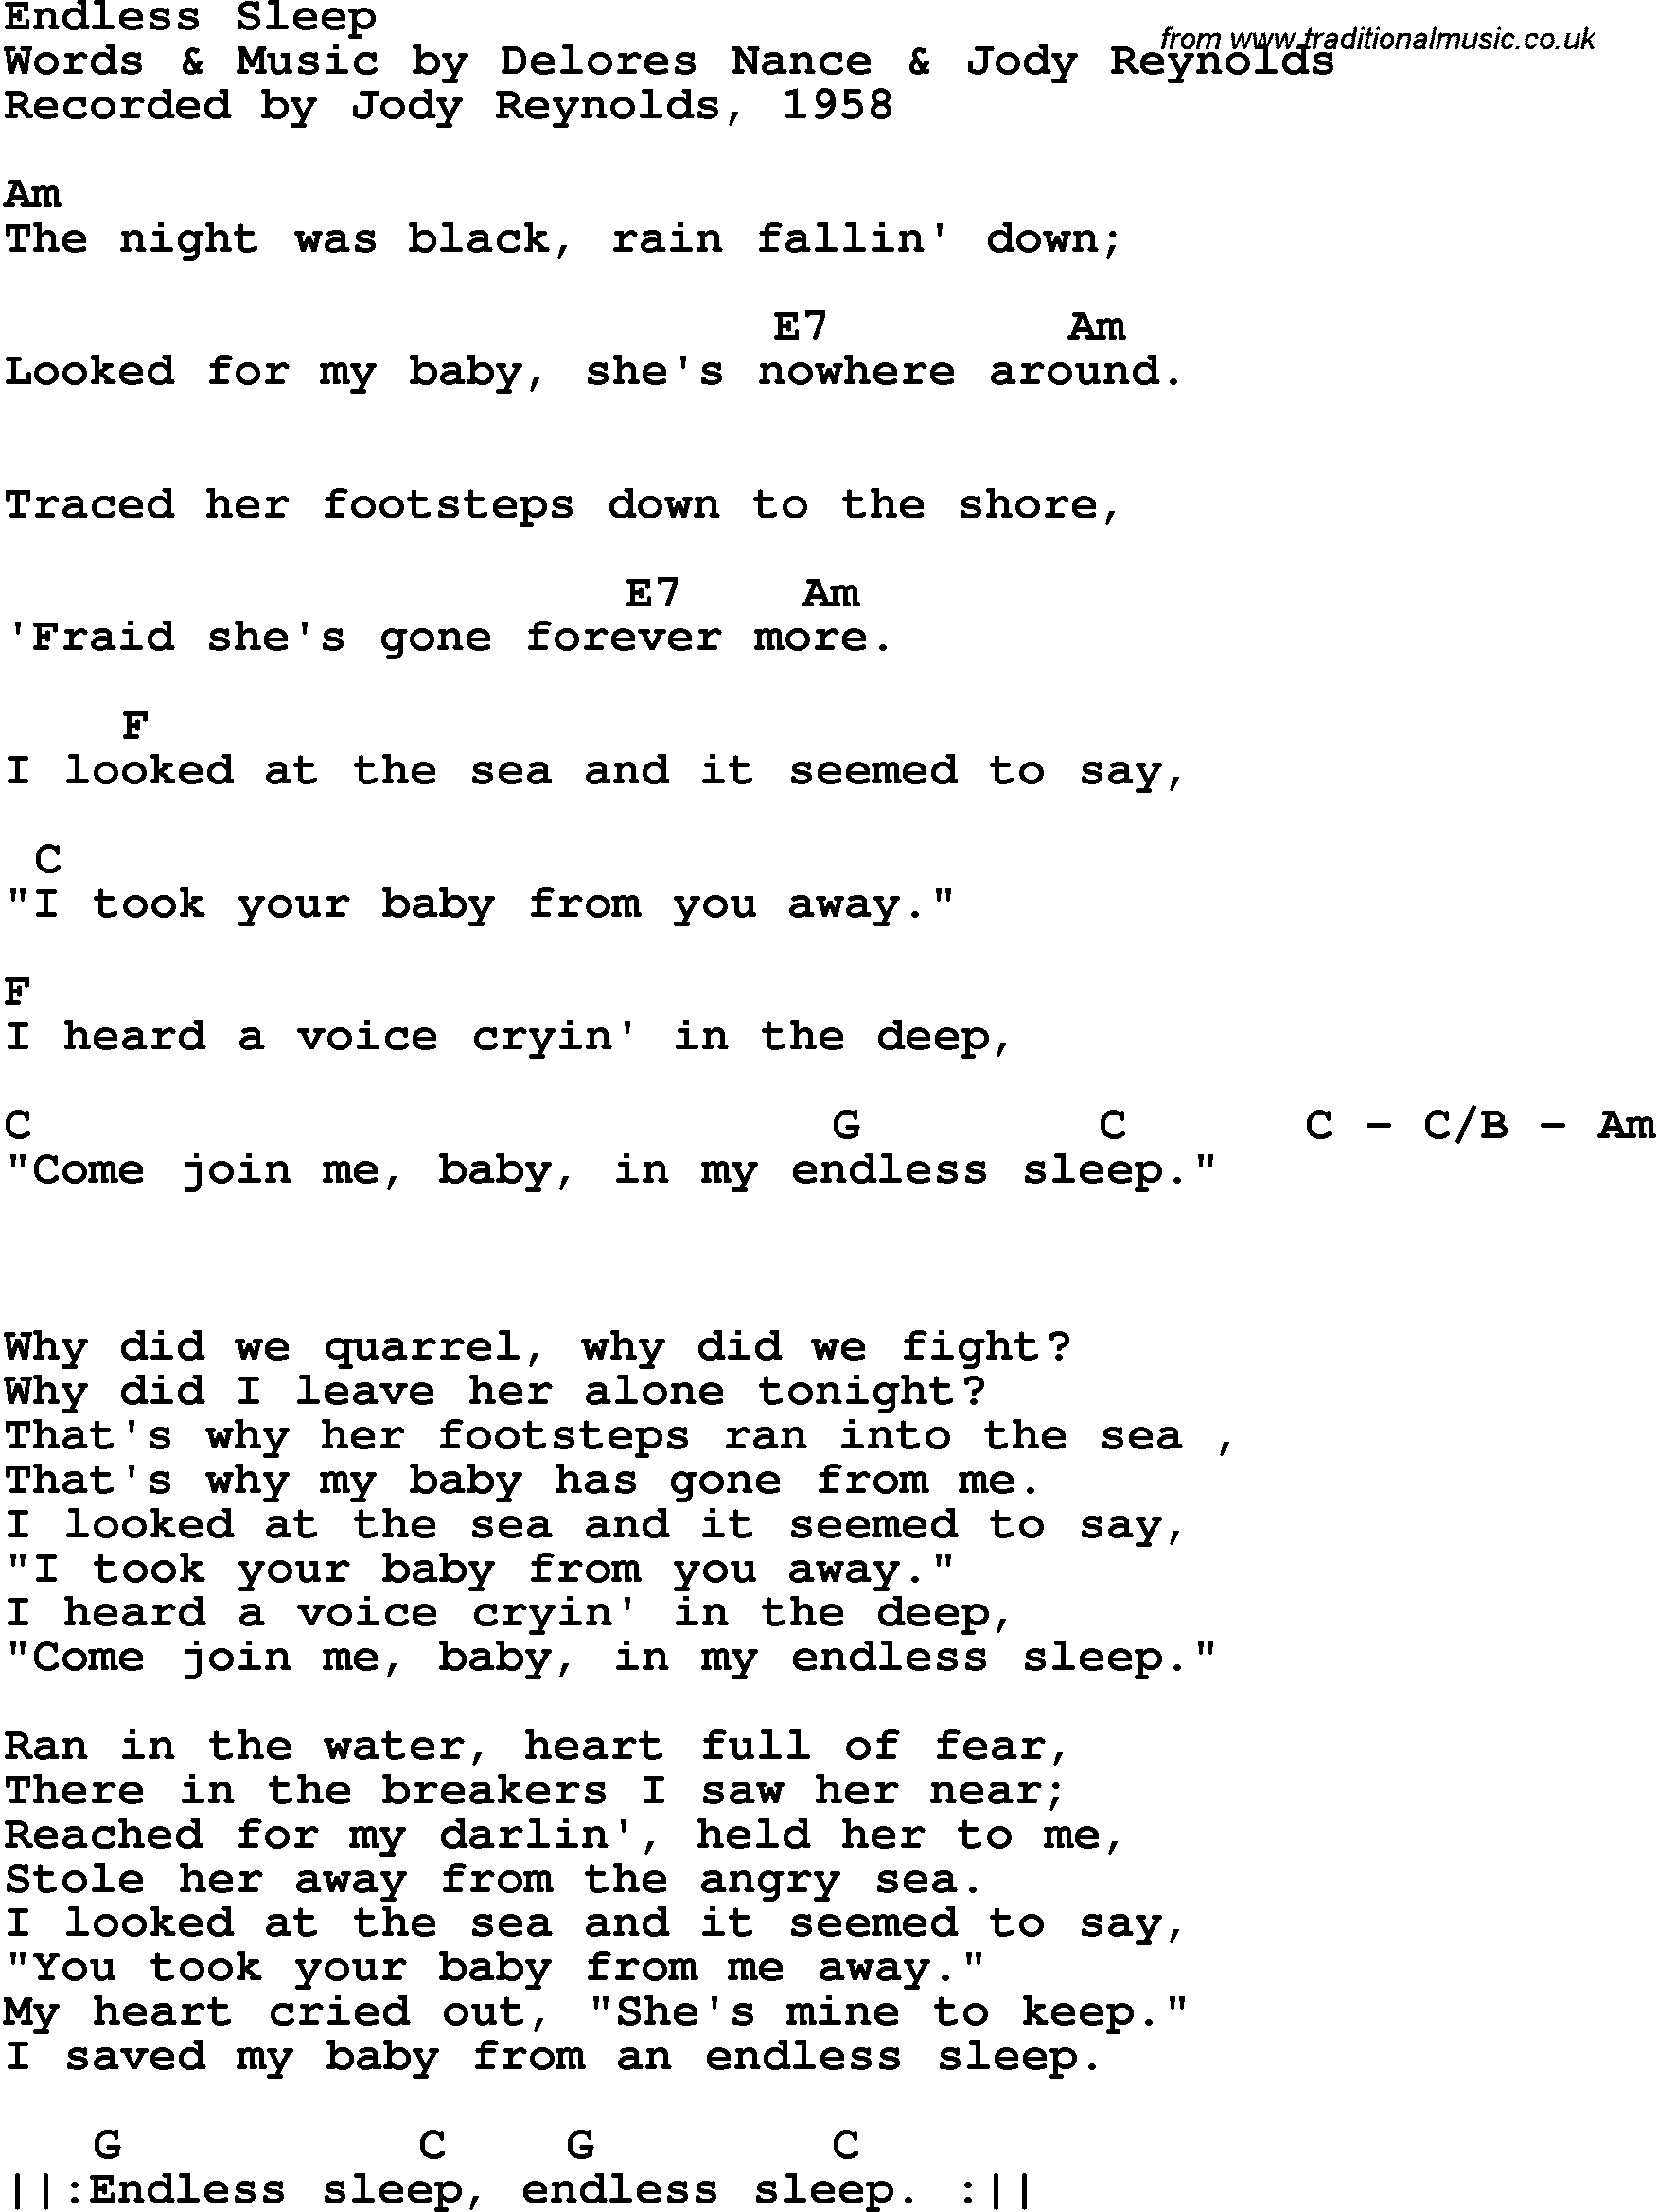 Song Lyrics with guitar chords for Endless Sleep - Jody Reynolds, 1958